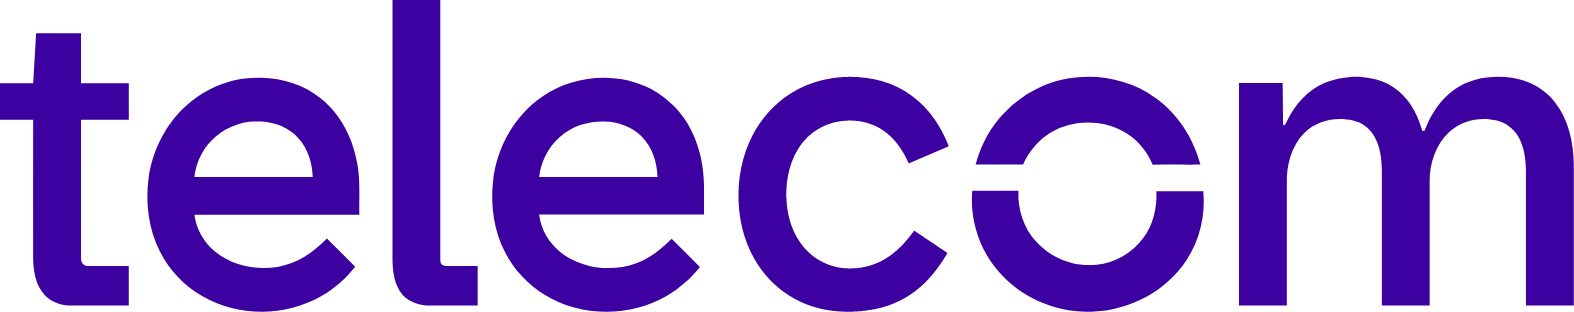 Telecom Argentina
 logo large (transparent PNG)